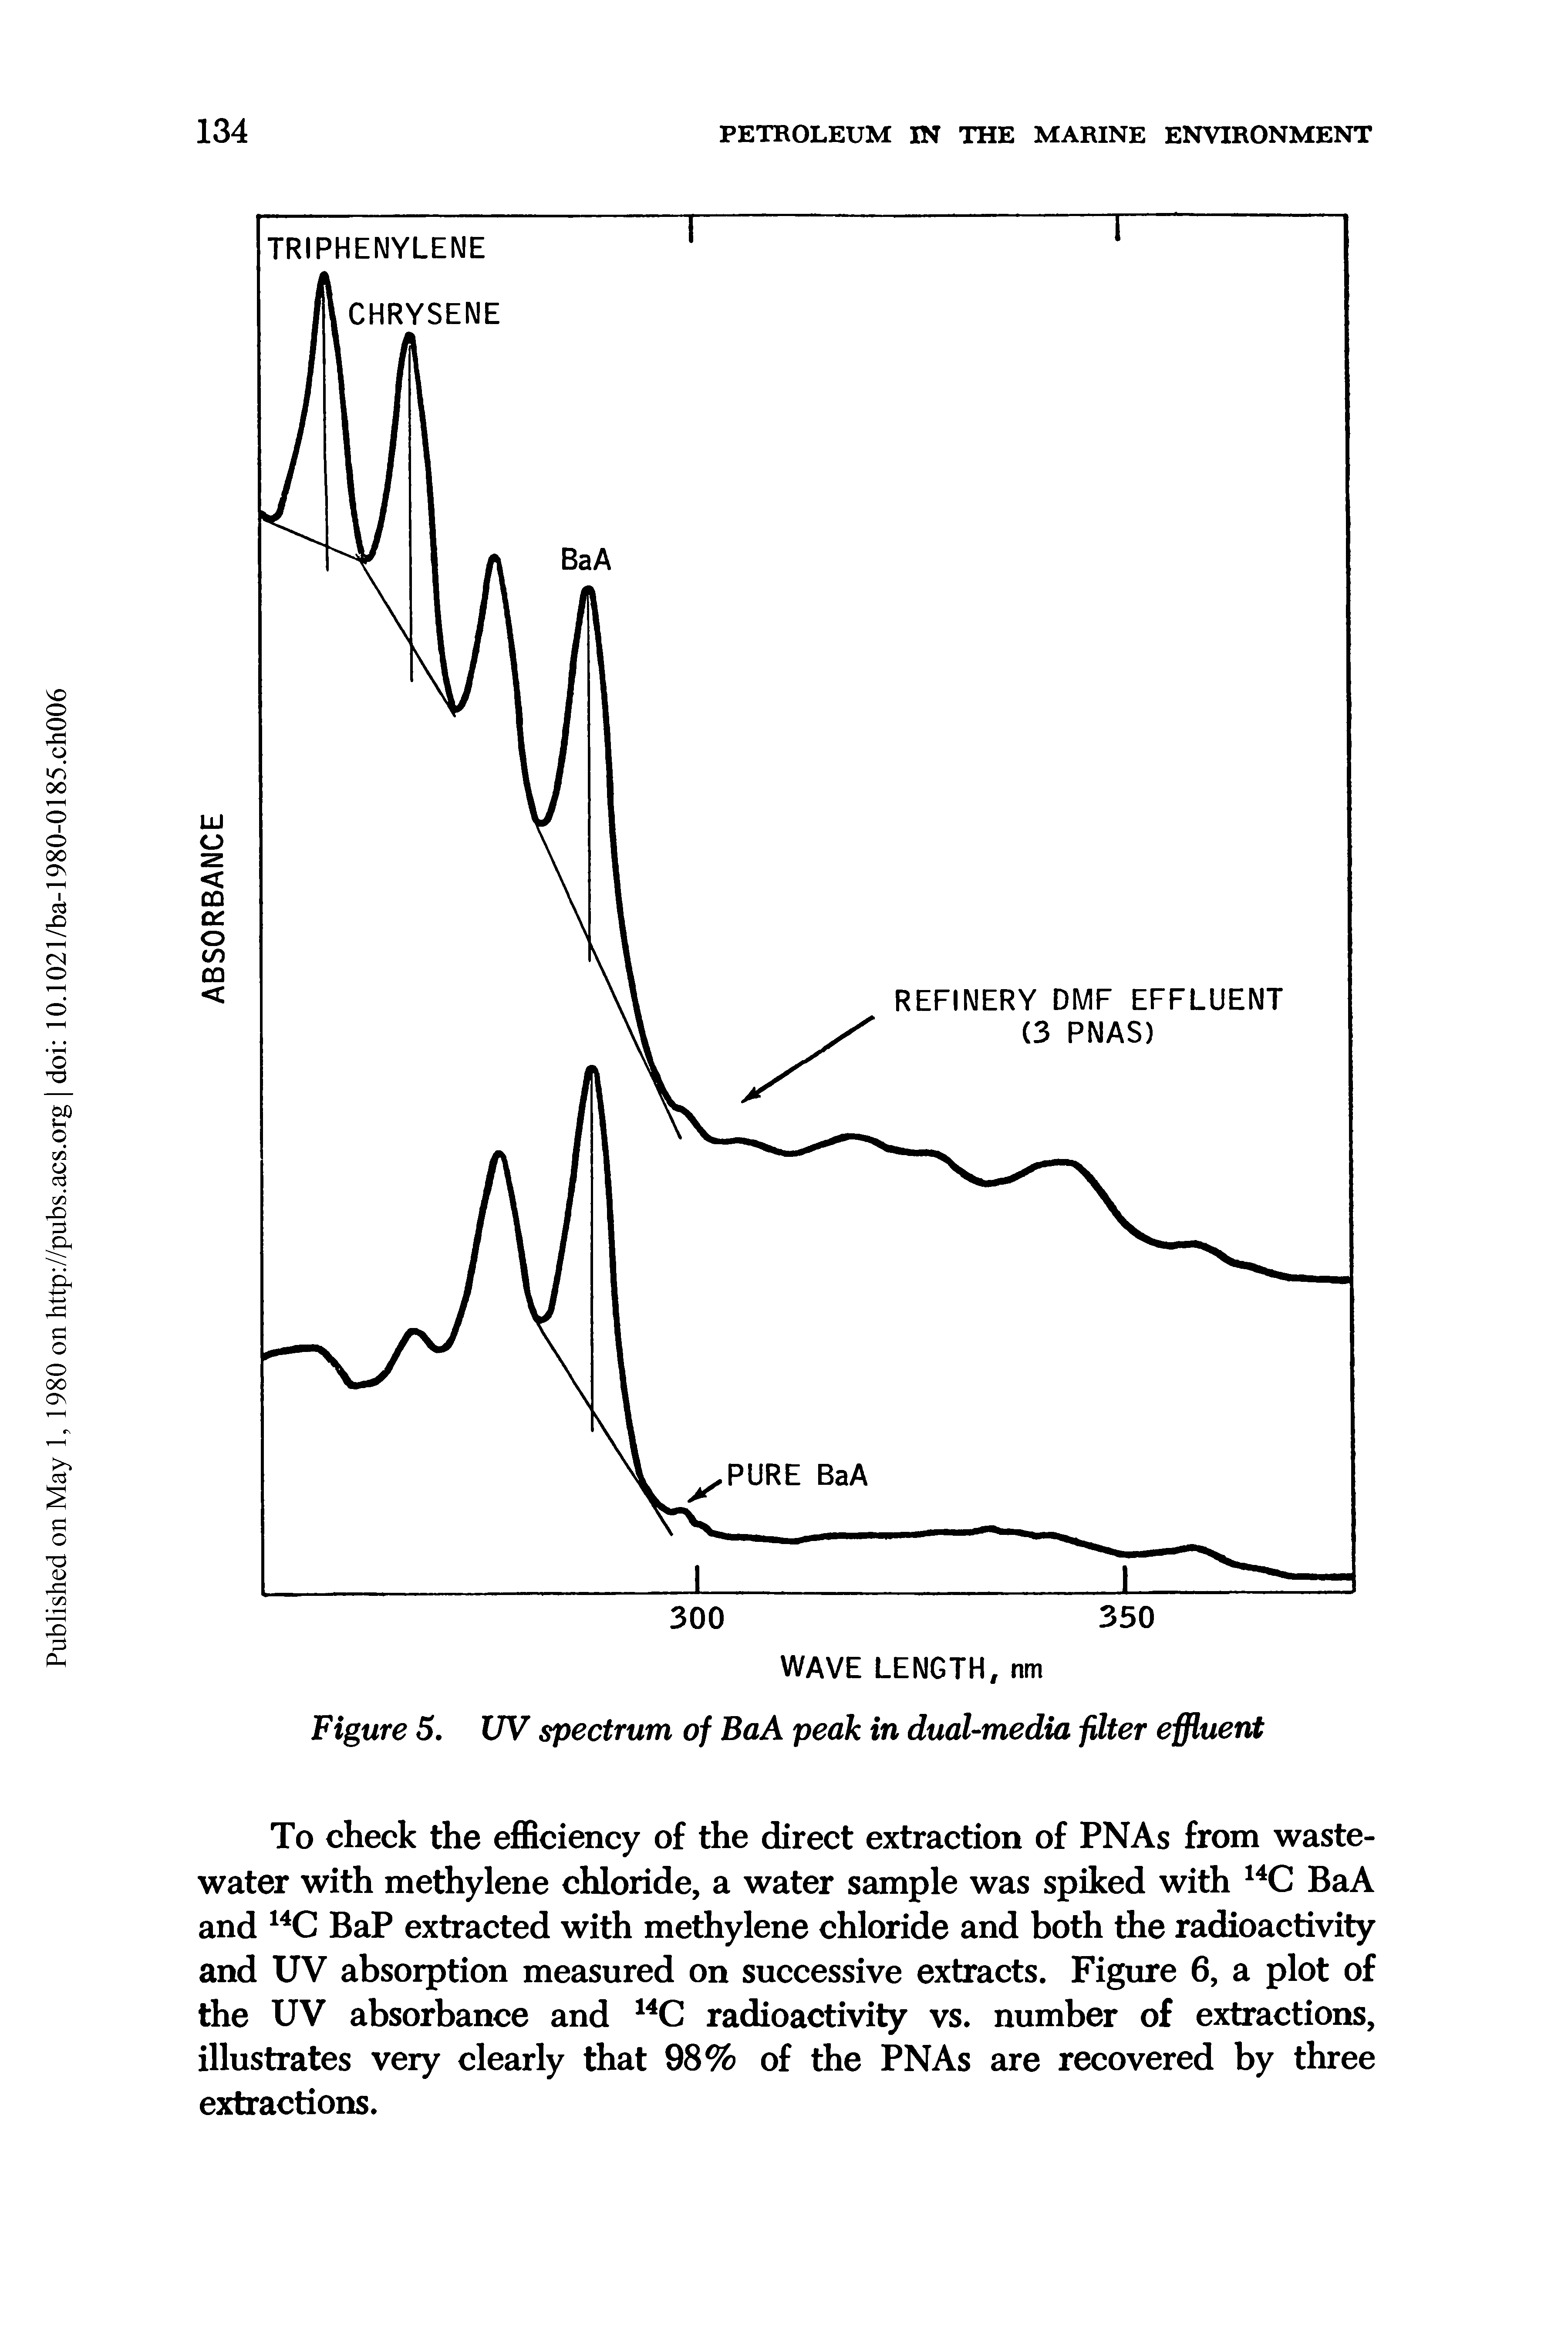 Figure 5. UV spectrum of BaA peak in dual-media filter effluent...